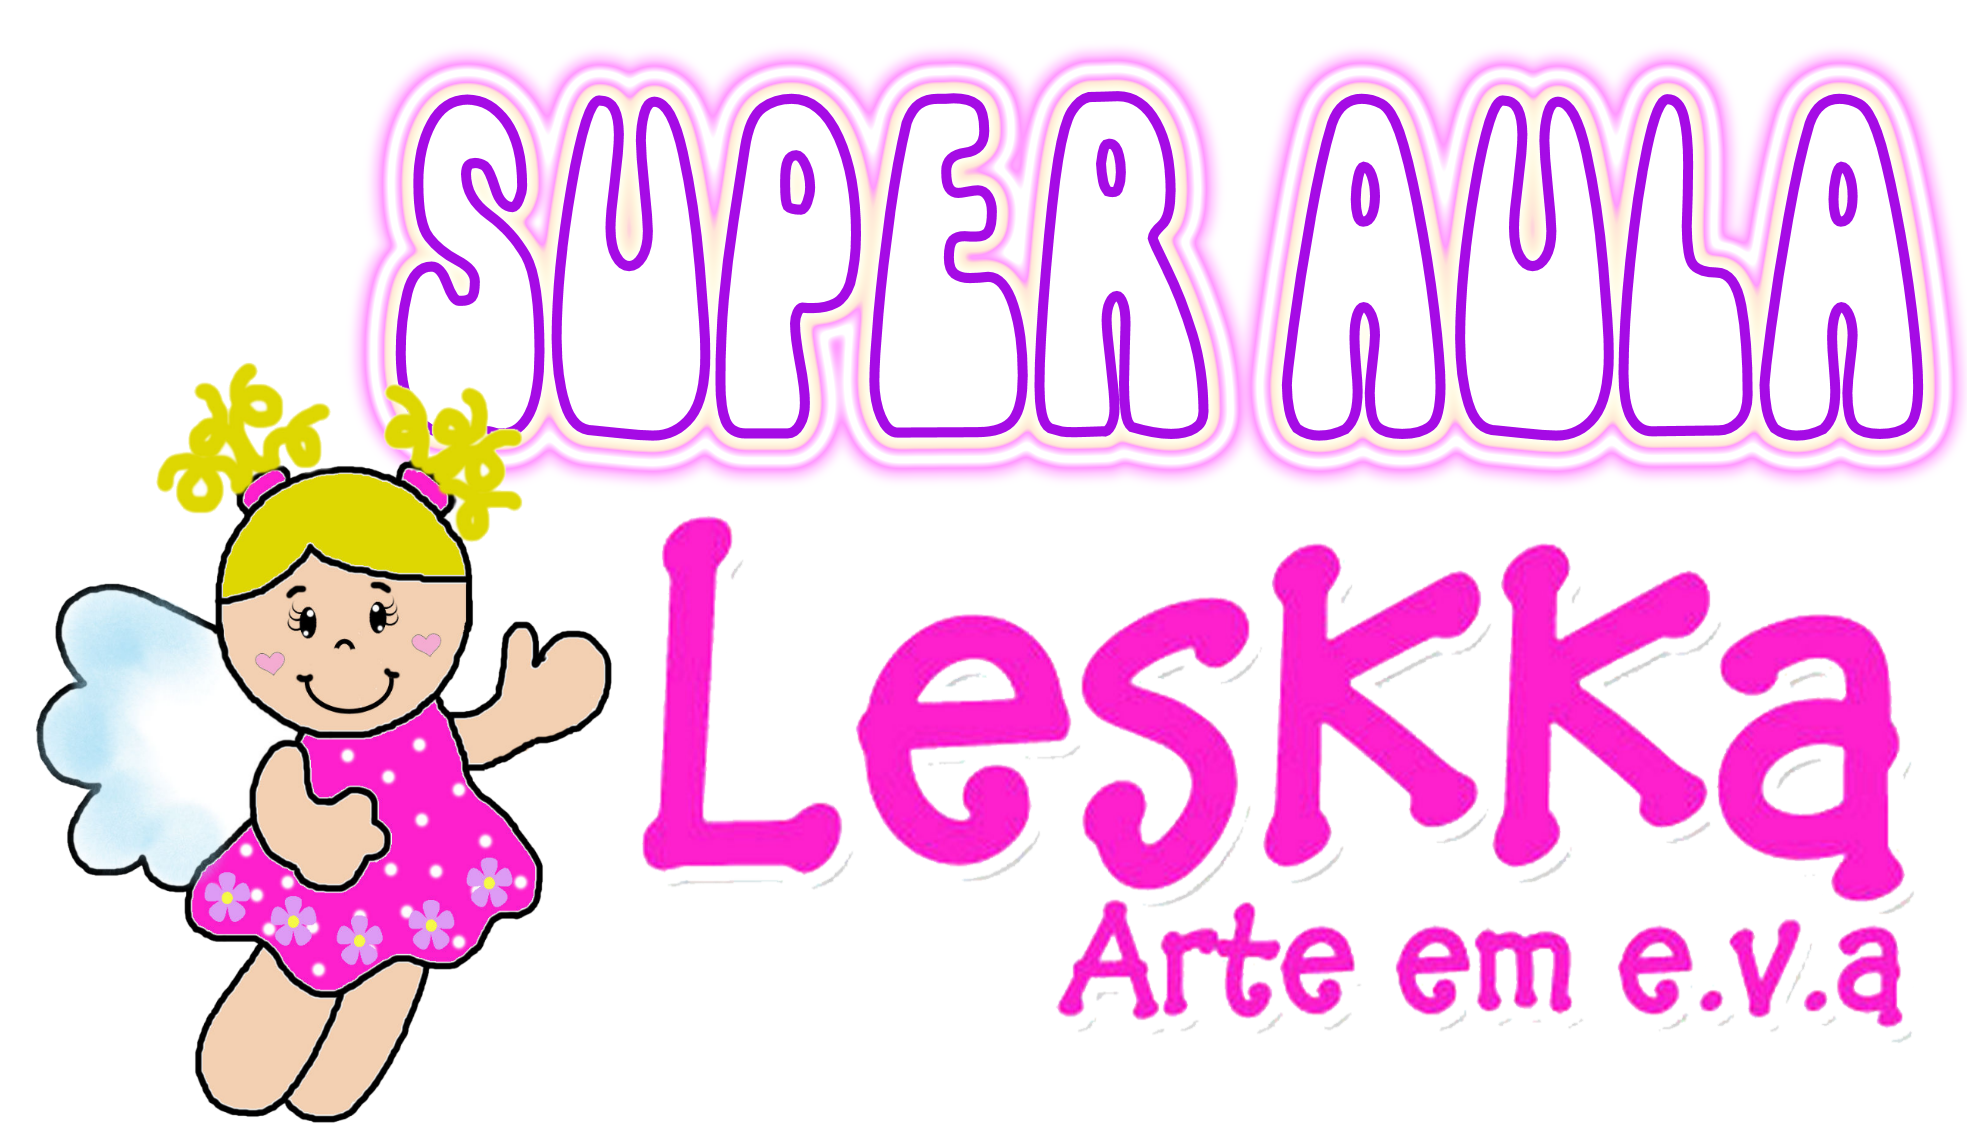 Leskka - Arte em e.v.a: Super Aula Leskka!